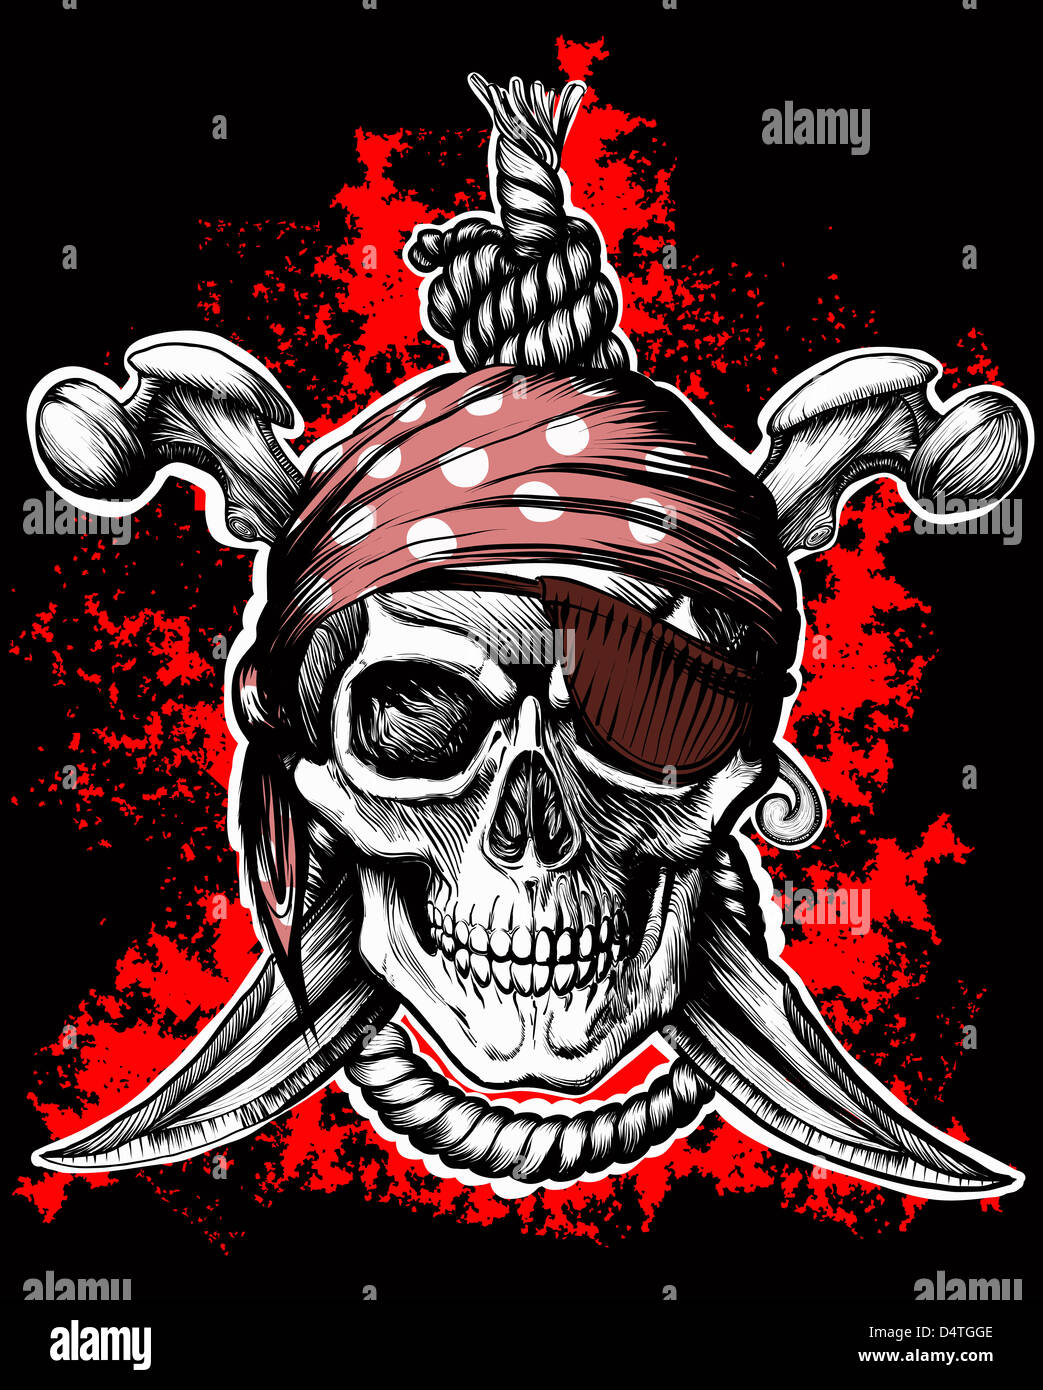 Piraten Flagge Jolly Roger 2 Bandana